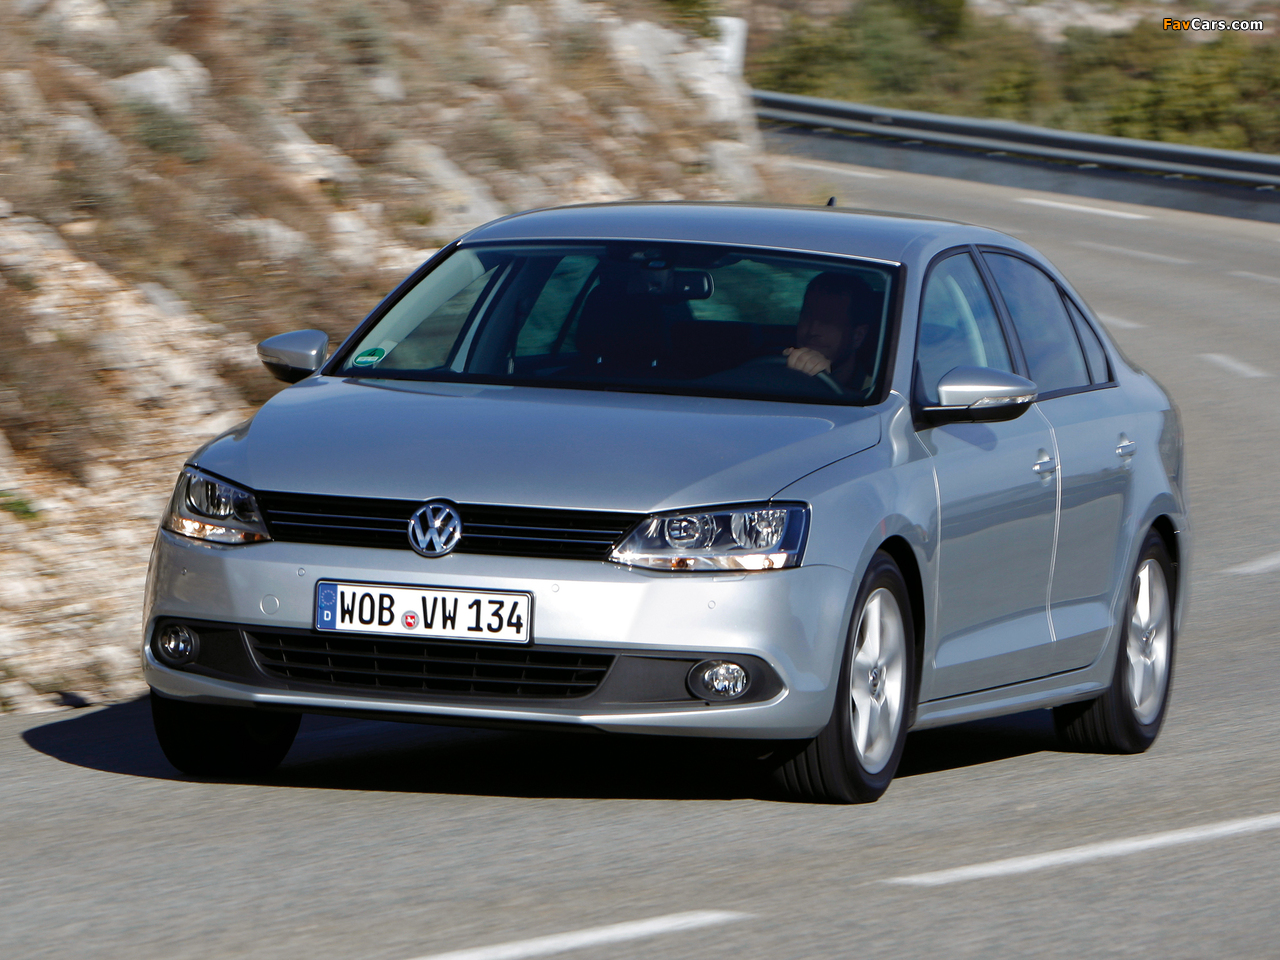 Volkswagen Jetta (Typ 1B) 2010 images (1280 x 960)